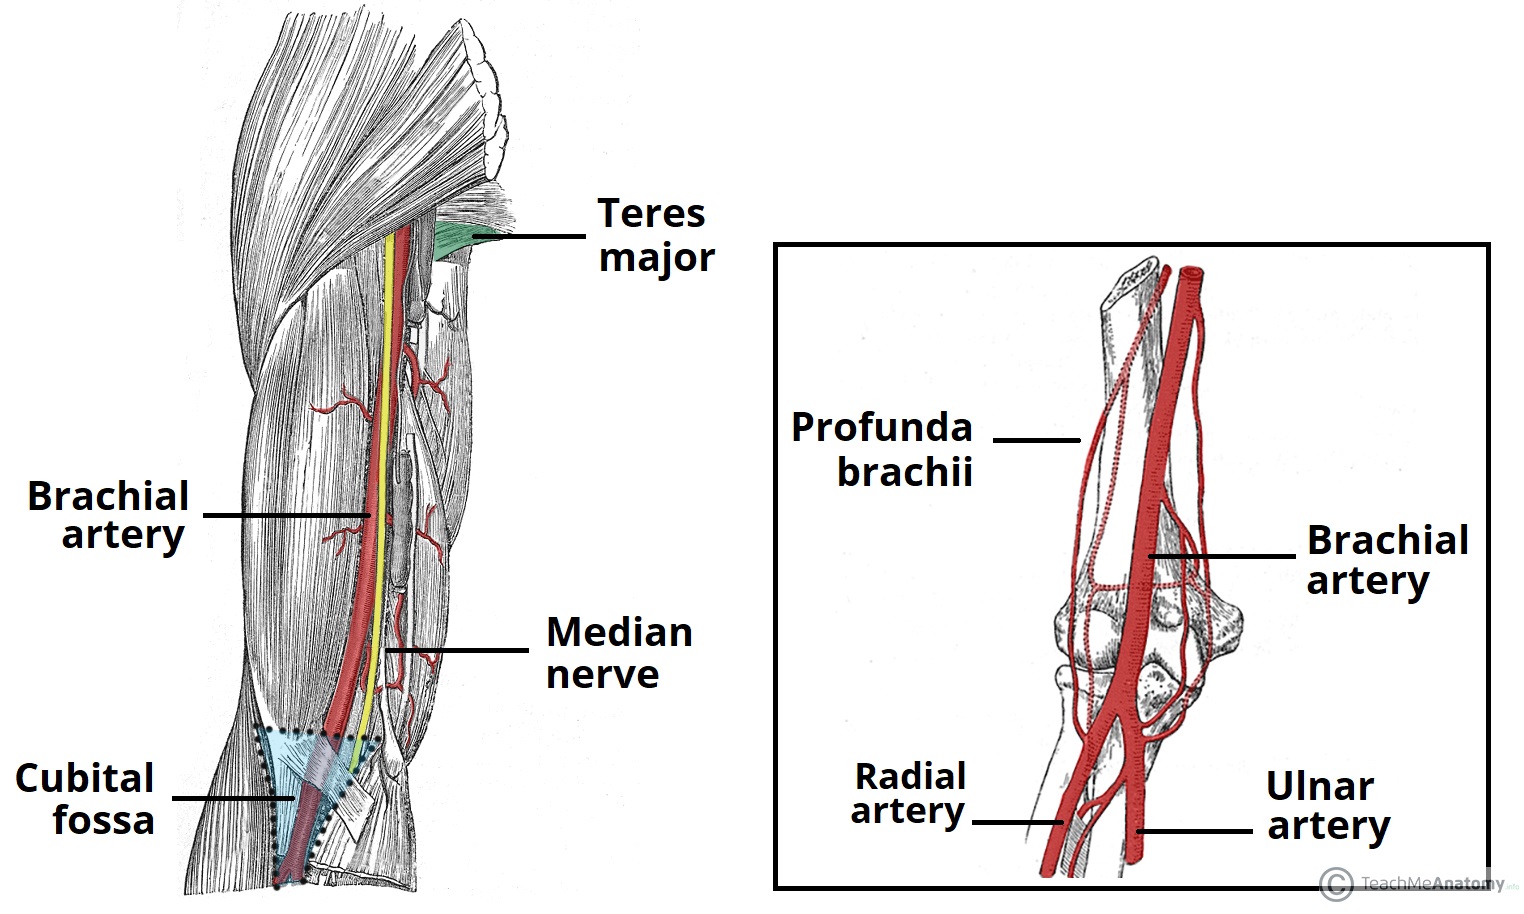 Median Nerve Brachial Artery